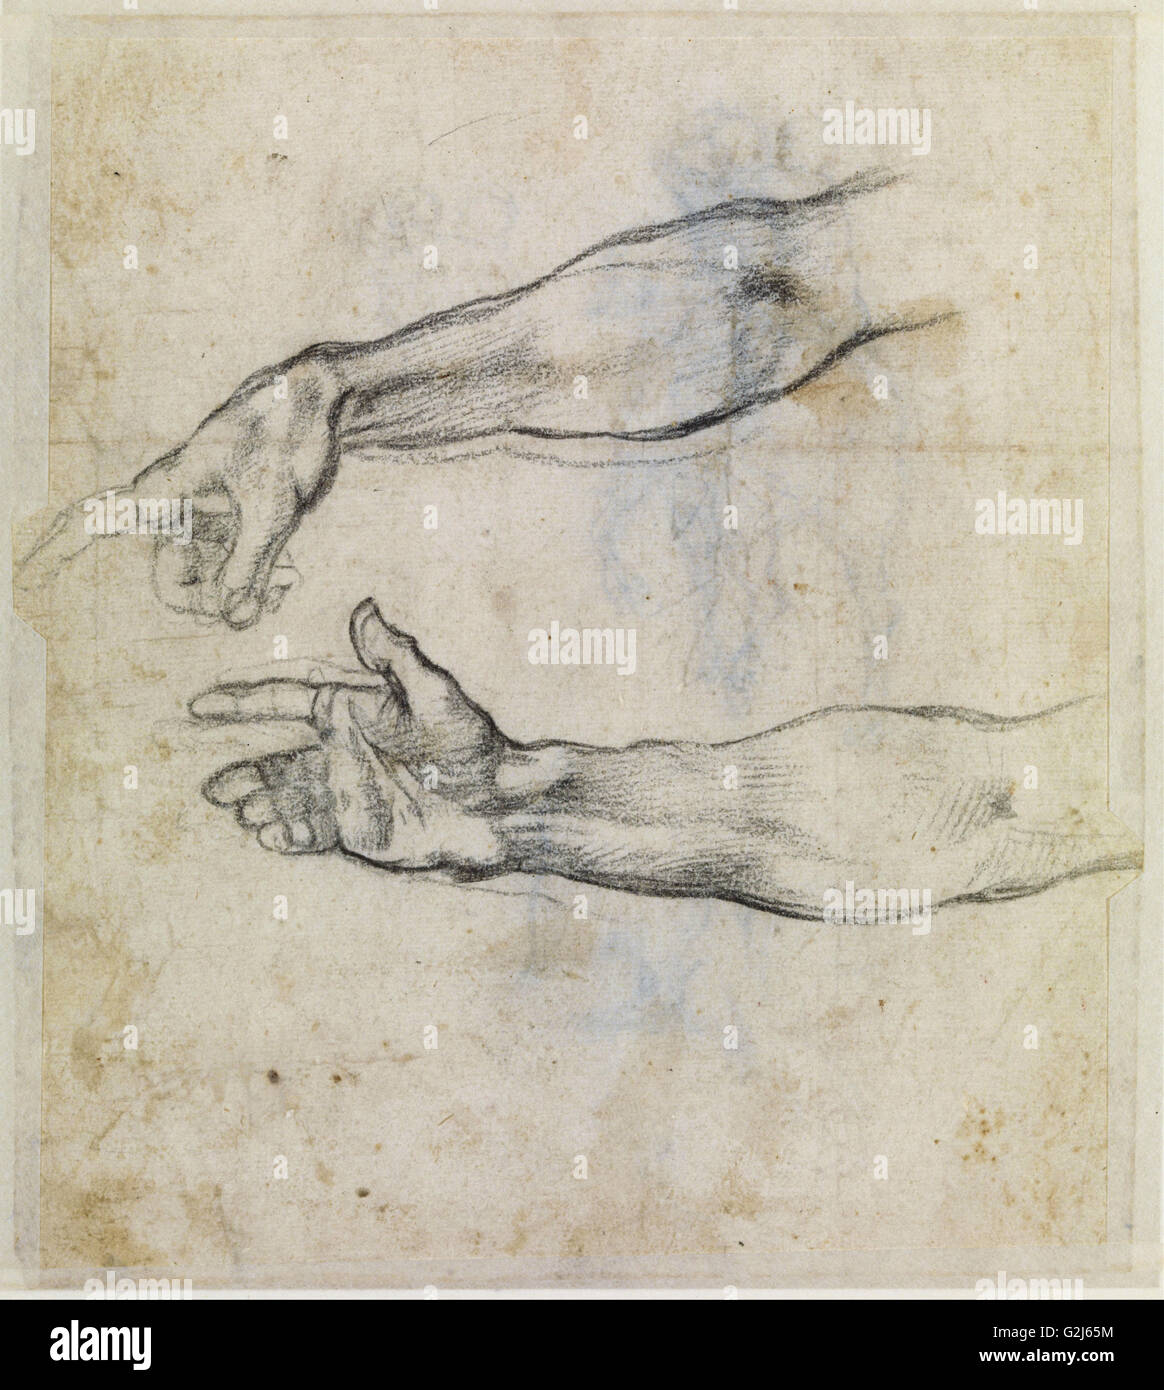 Michelangelo Buonarroti  Drawings  Page 3  TuttArt  Pittura   Scultura  Poesia  Musica